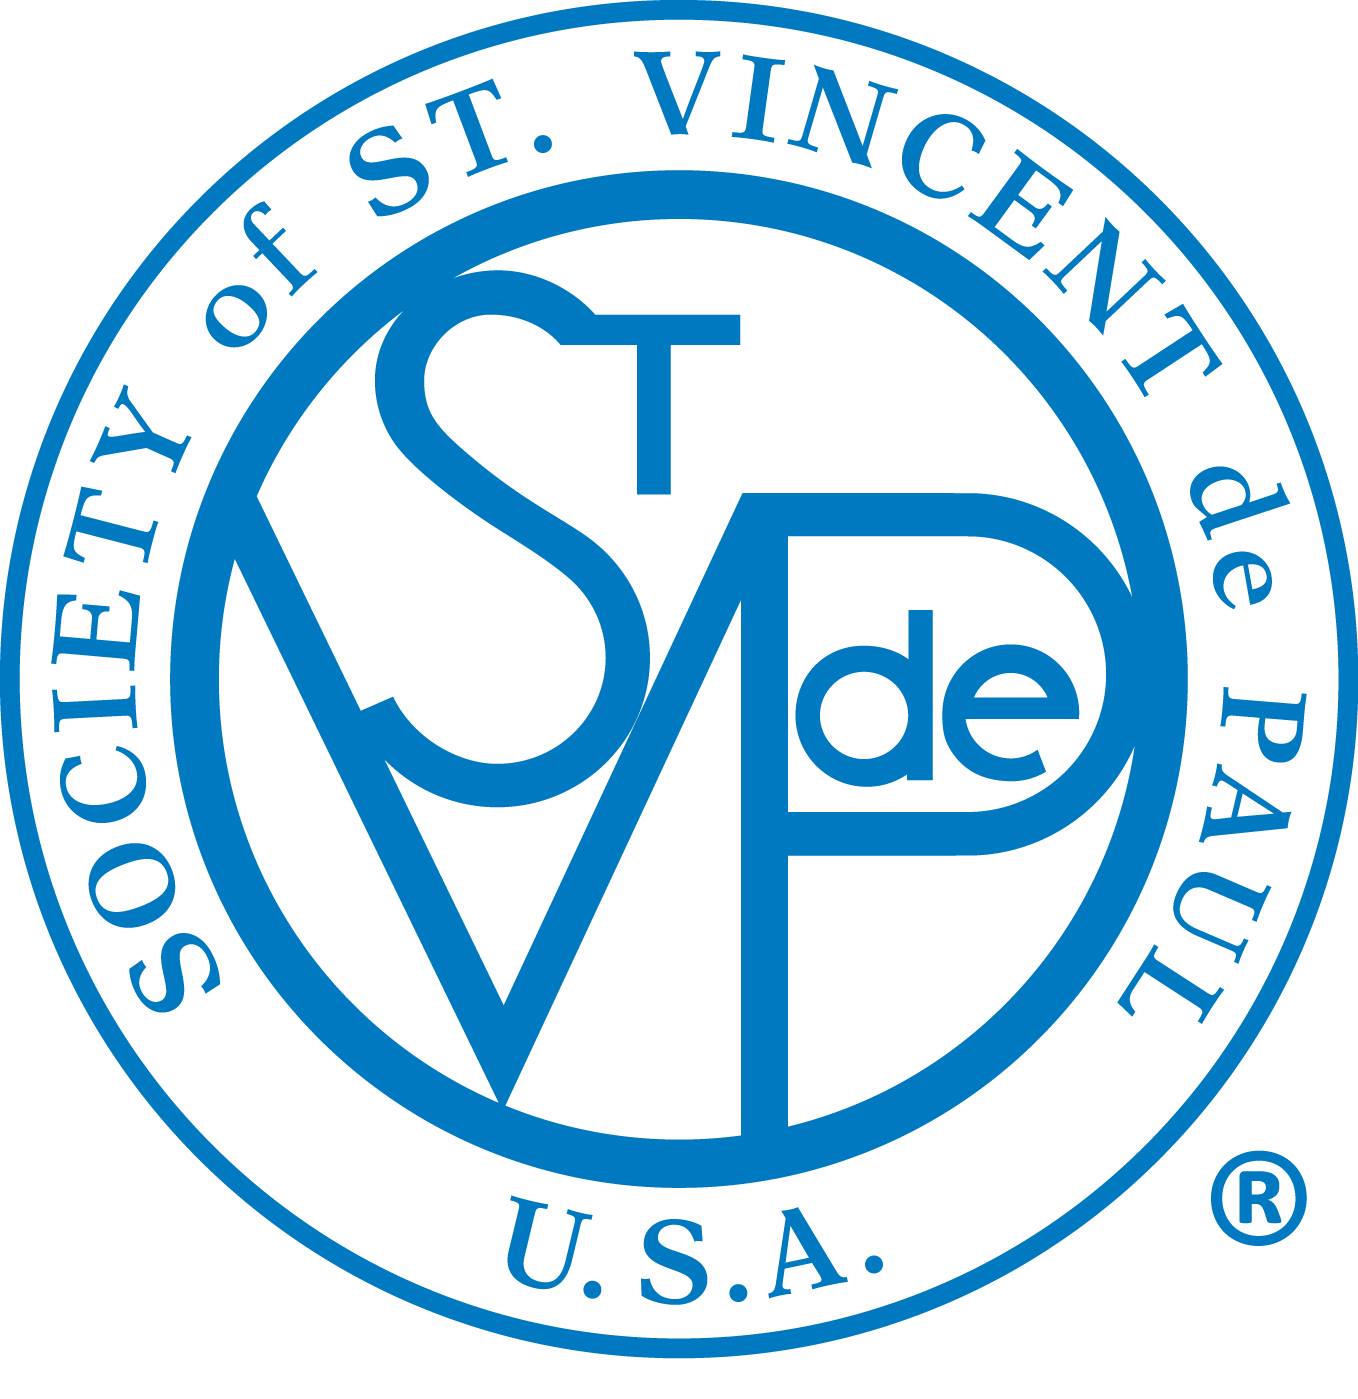 Company logo of St. Vincent de Paul Society